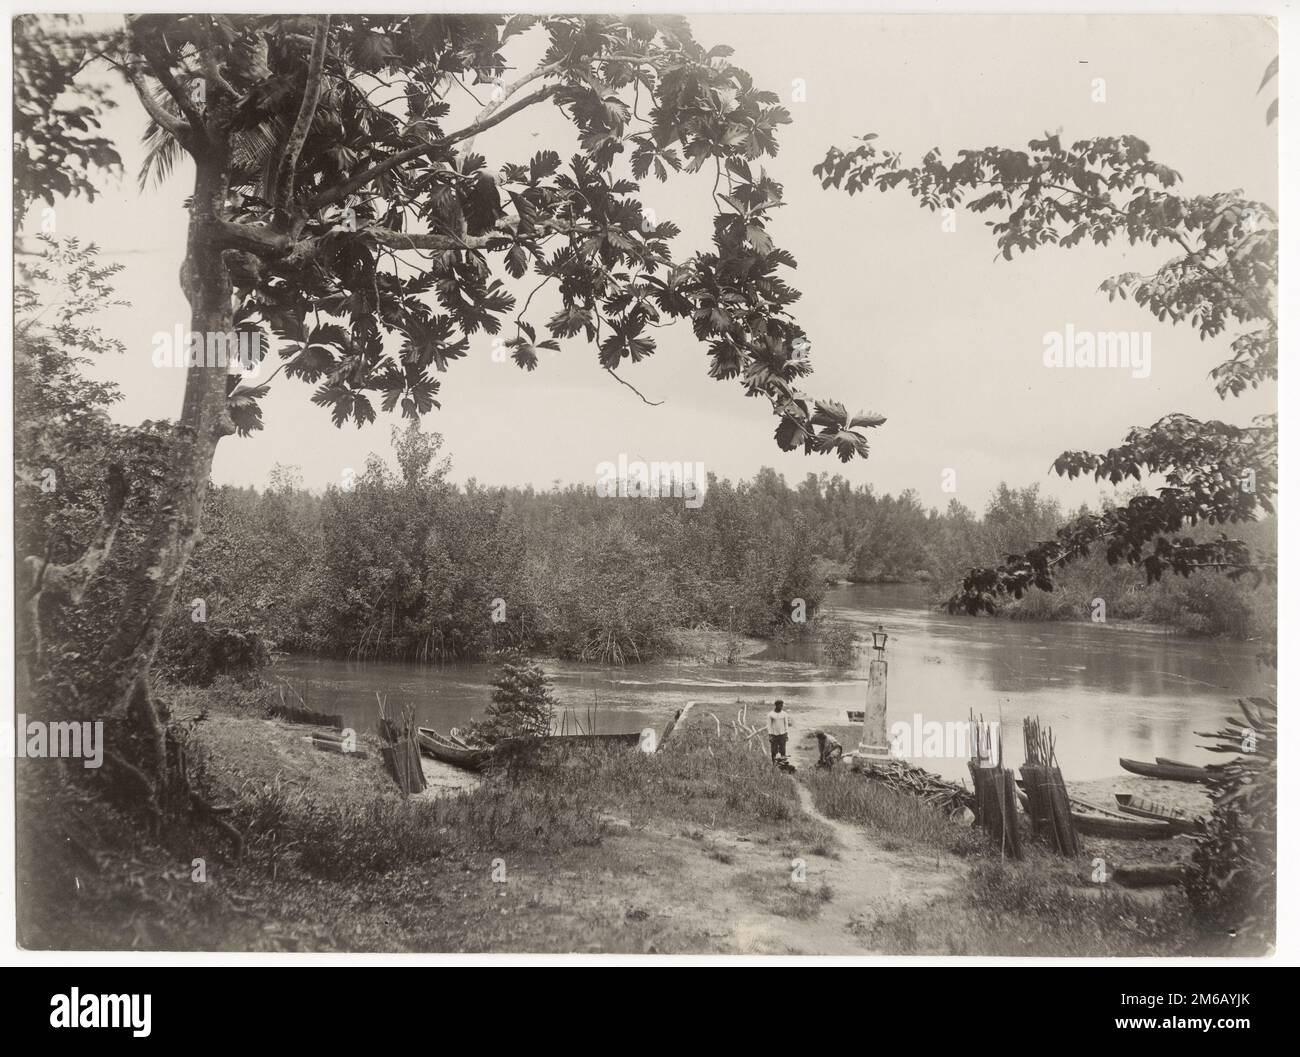 Alphonso Lisk-Carew studio: c.1910 West Africa Sierra Leone - view on a River near Freetown Stock Photo